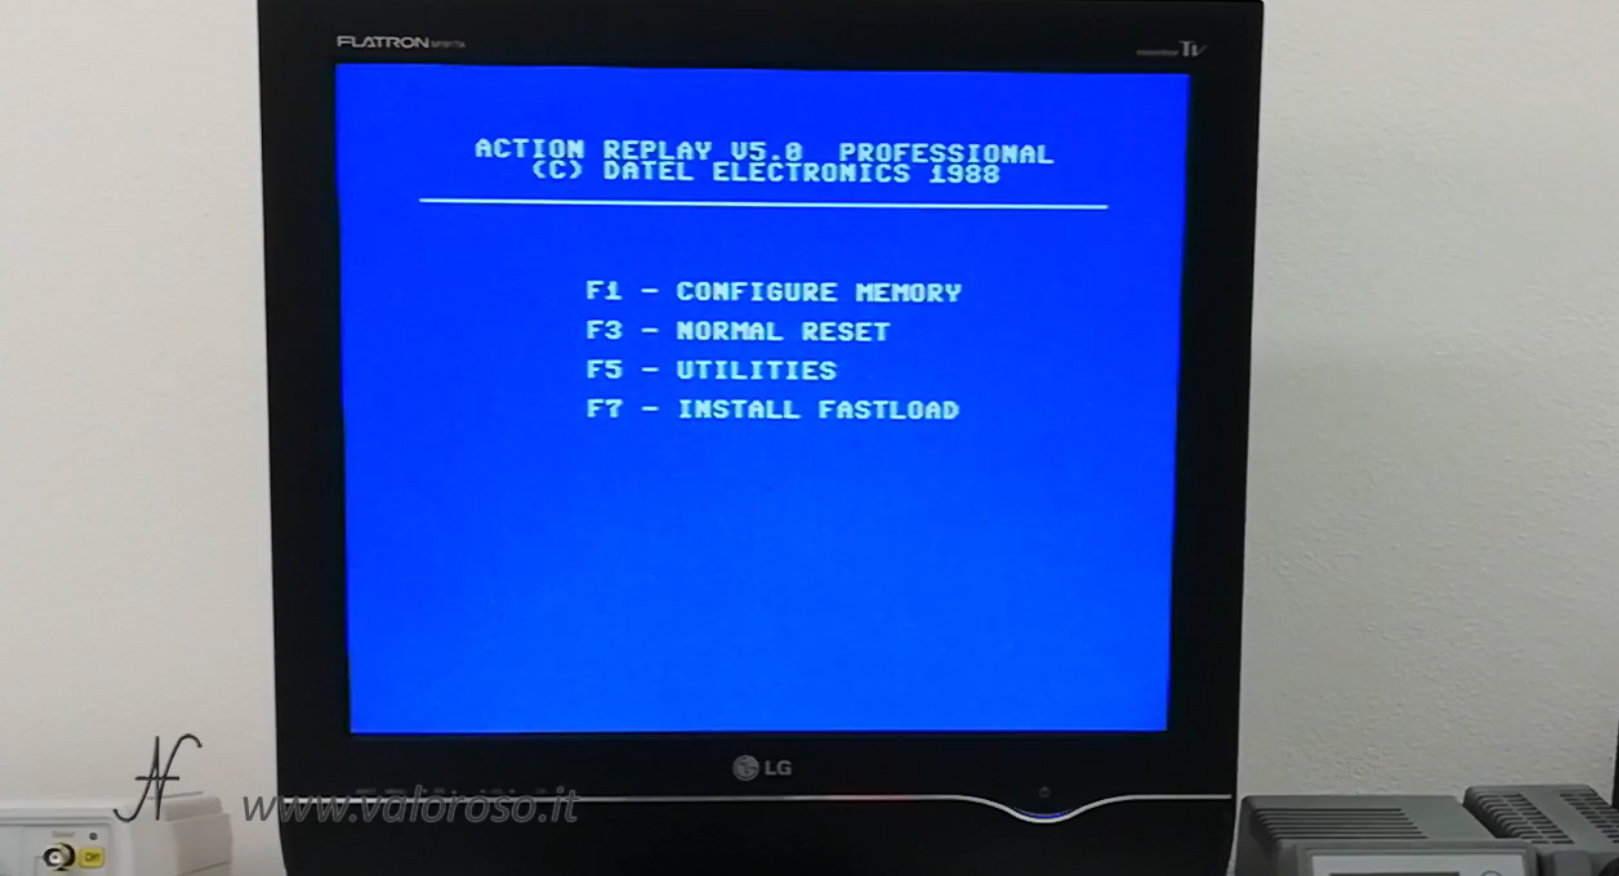 Datel Action Replay 1988, Commodore 64, menu avvio, configure memory, normal reset, utilities, install fastload